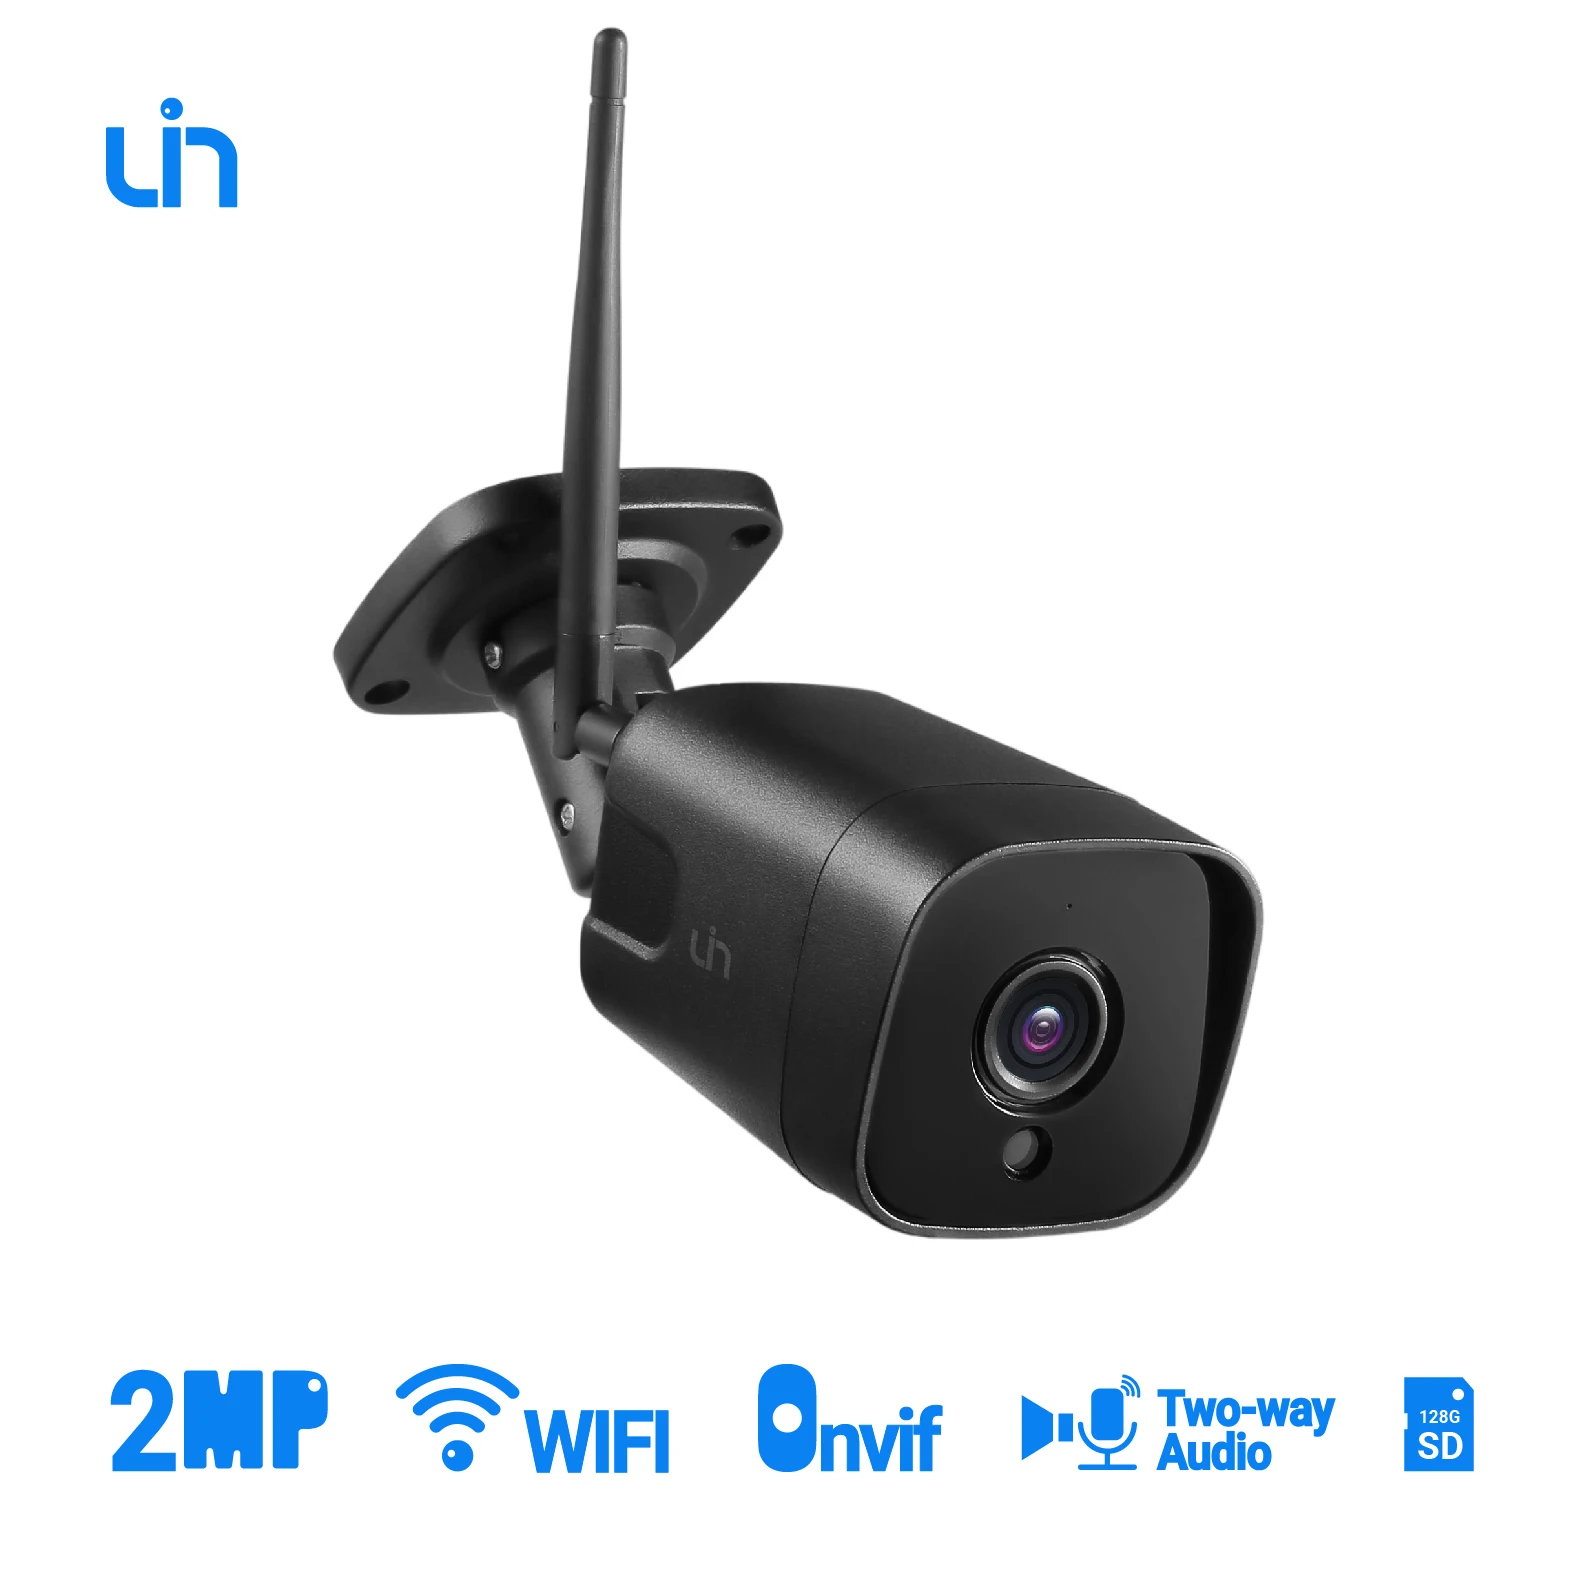 

UIN 2MP WiFi IR Security CCTV Camera Indoor/Outdoor Two-Way Audio Mic & Speaker Onvif 25m IP66 Wireless Camera Support SD 128G